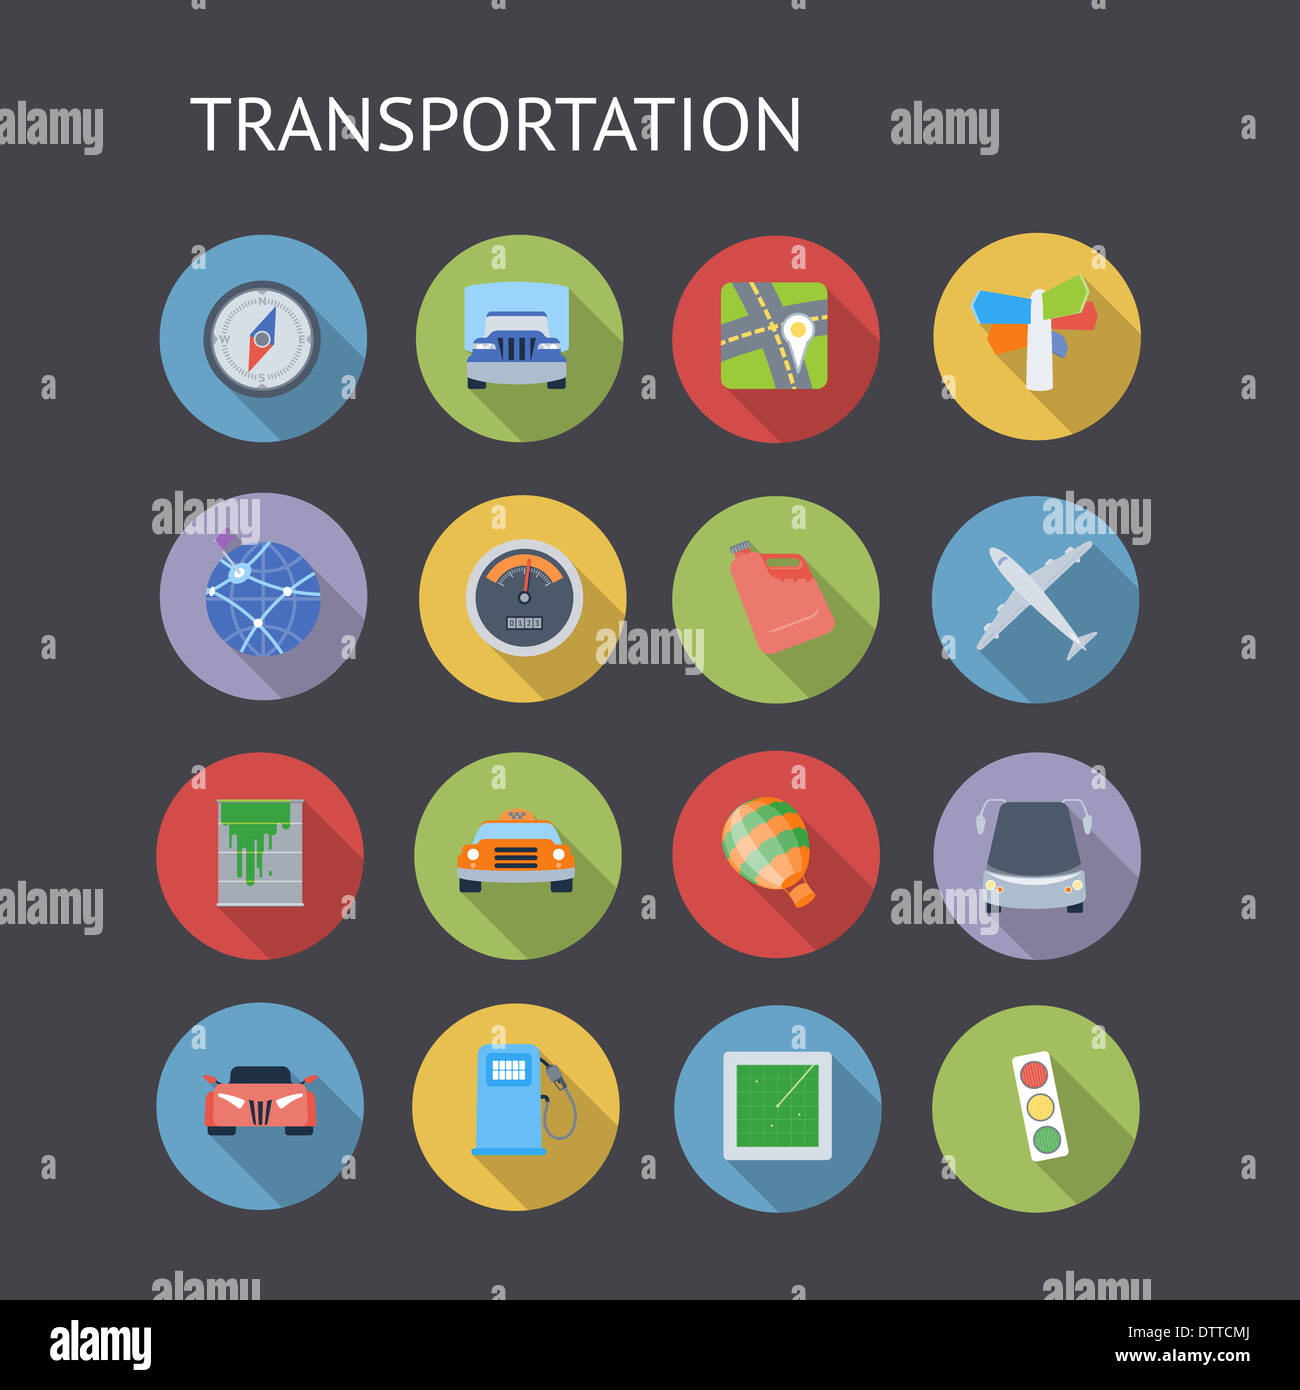 Flat icons for transportation. Raster version. Stock Photo